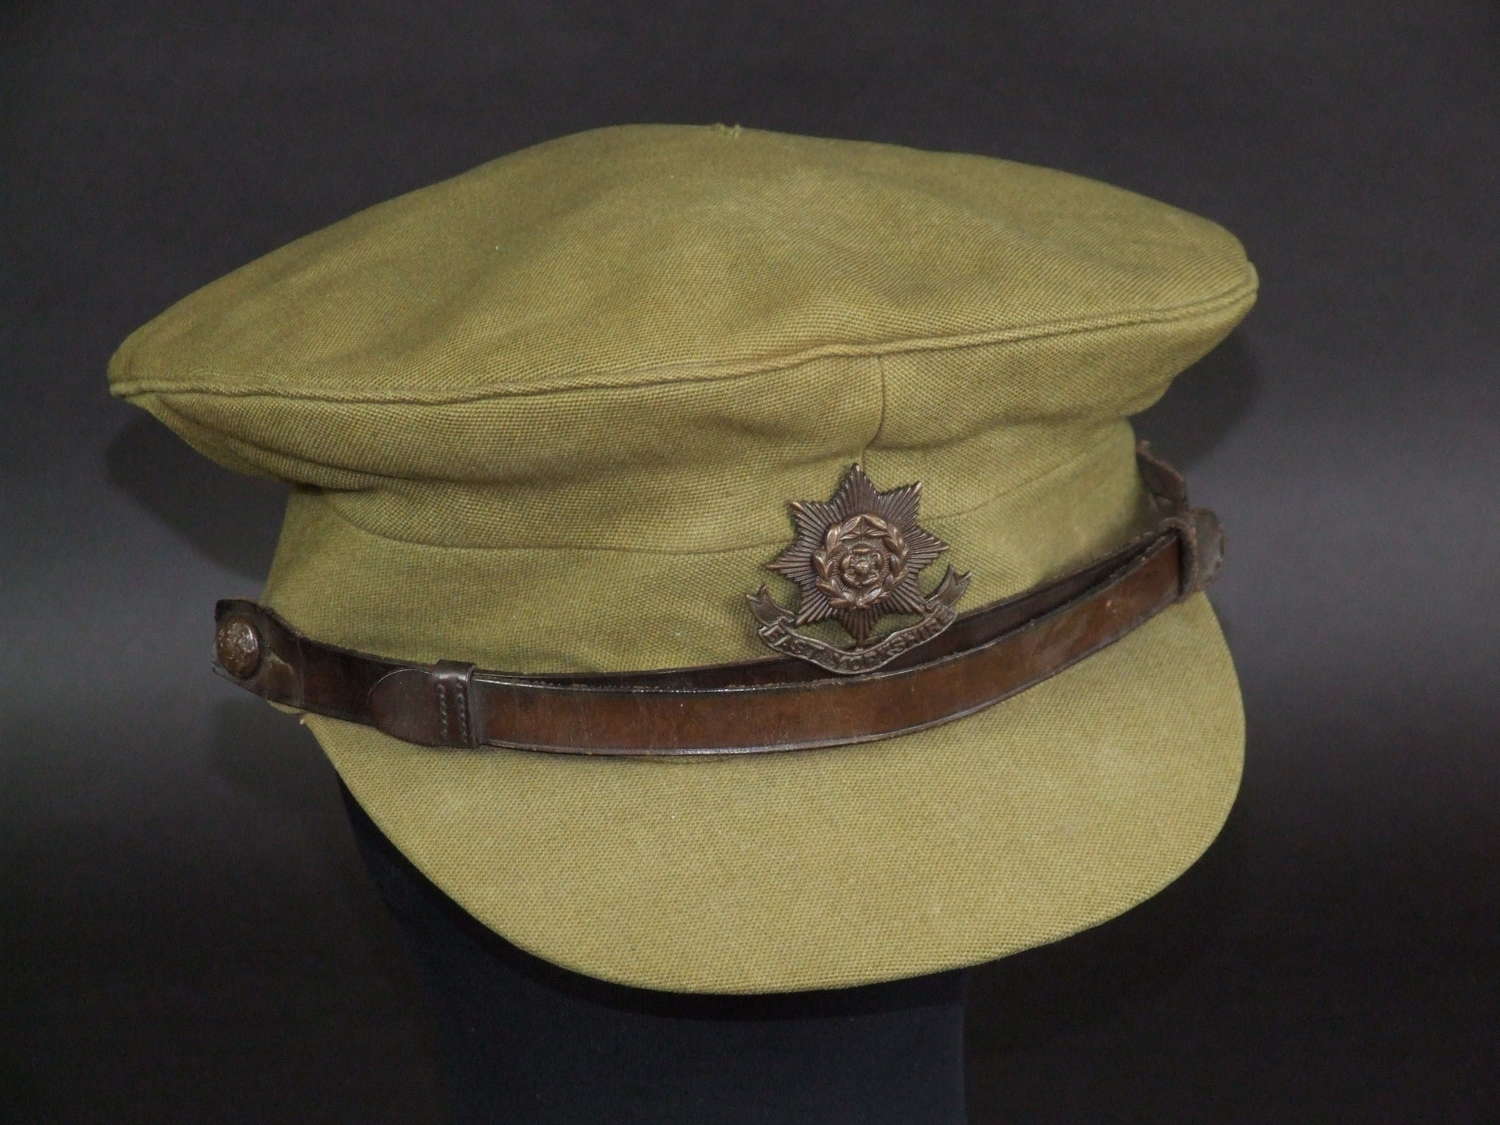 Service Dress Cap. East Yorkshire Regiment